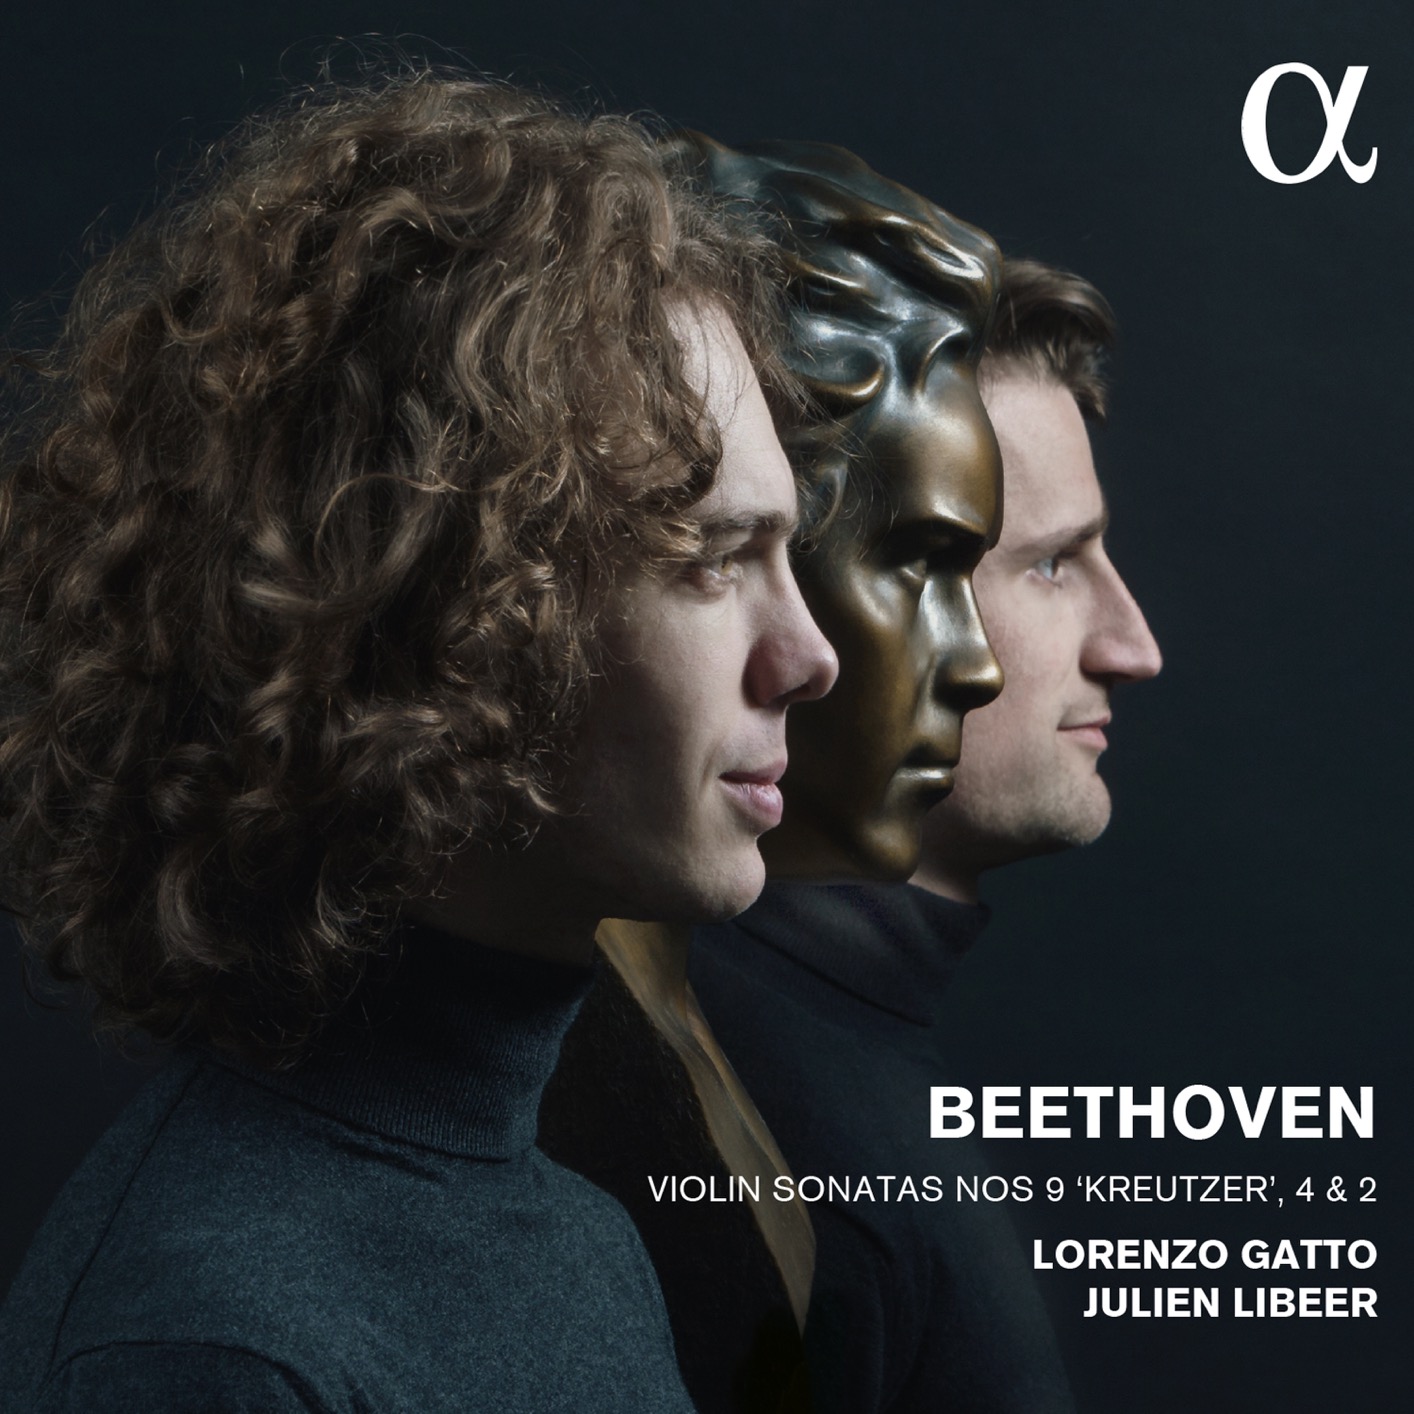 Lorenzo Gatto & Julien Libeer - Beethoven: Violin Sonatas Nos 9 "Kreutzer", 4 & 2 (2016) [Qobuz FLAC 24bit/96kHz]